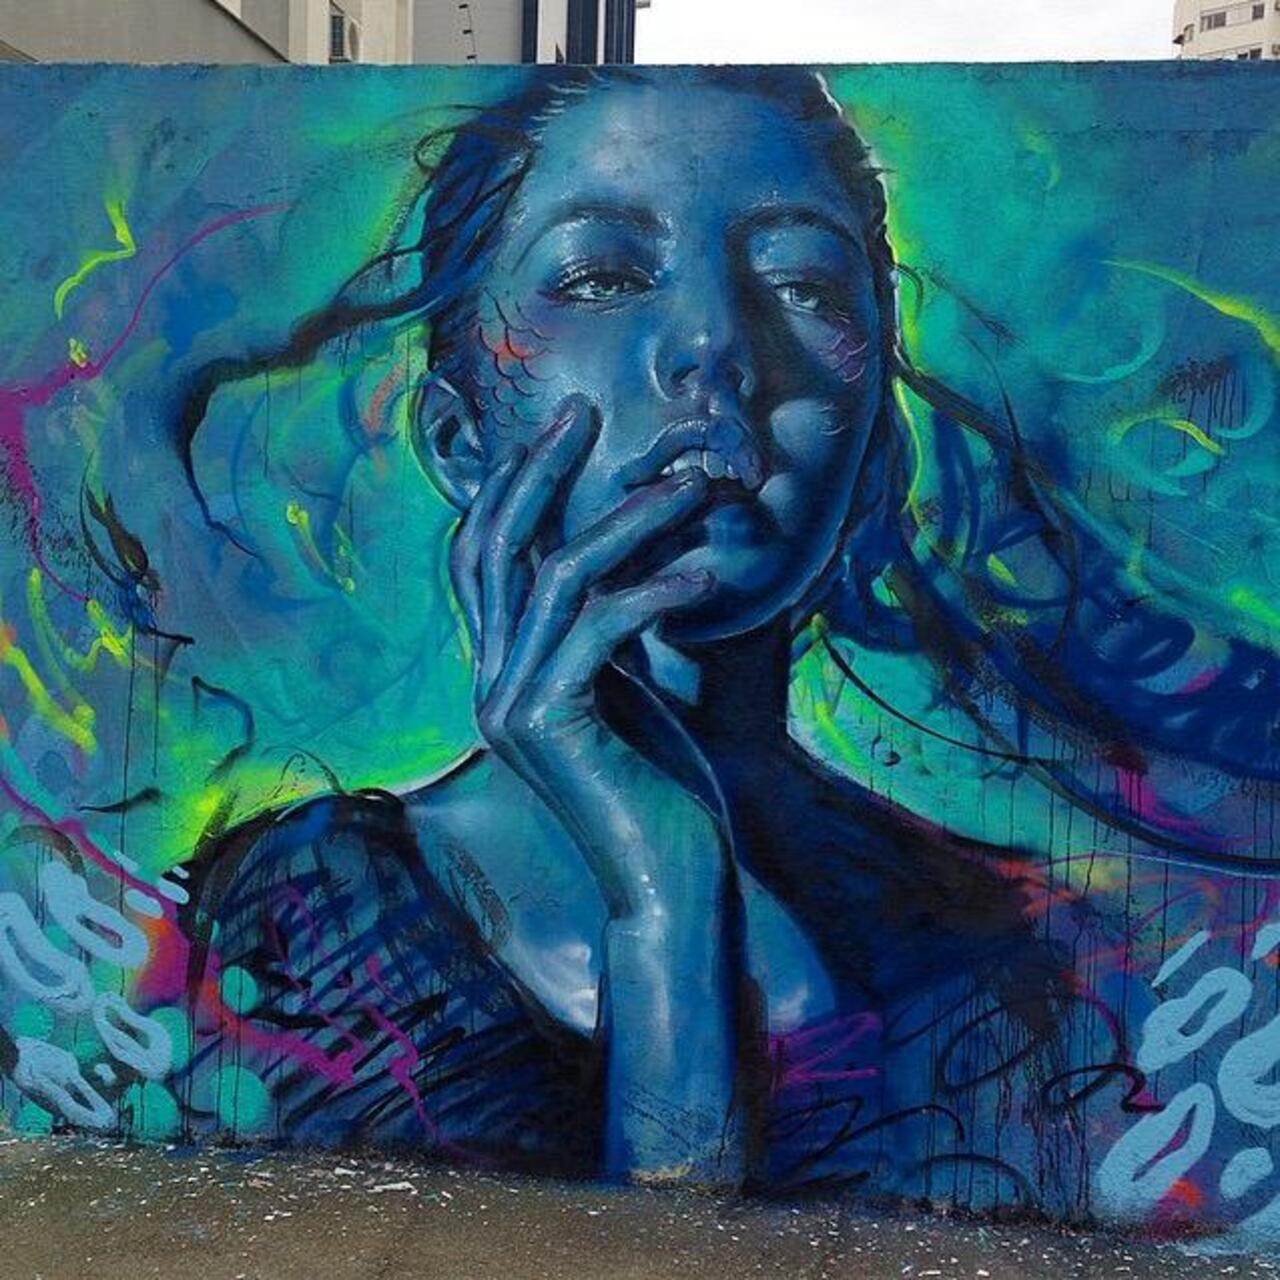 Thiago Valdi new Street Art piece titled 'Day Dreamer'

#art #mural #graffiti #streetart http://t.co/xLxpX4hpqI